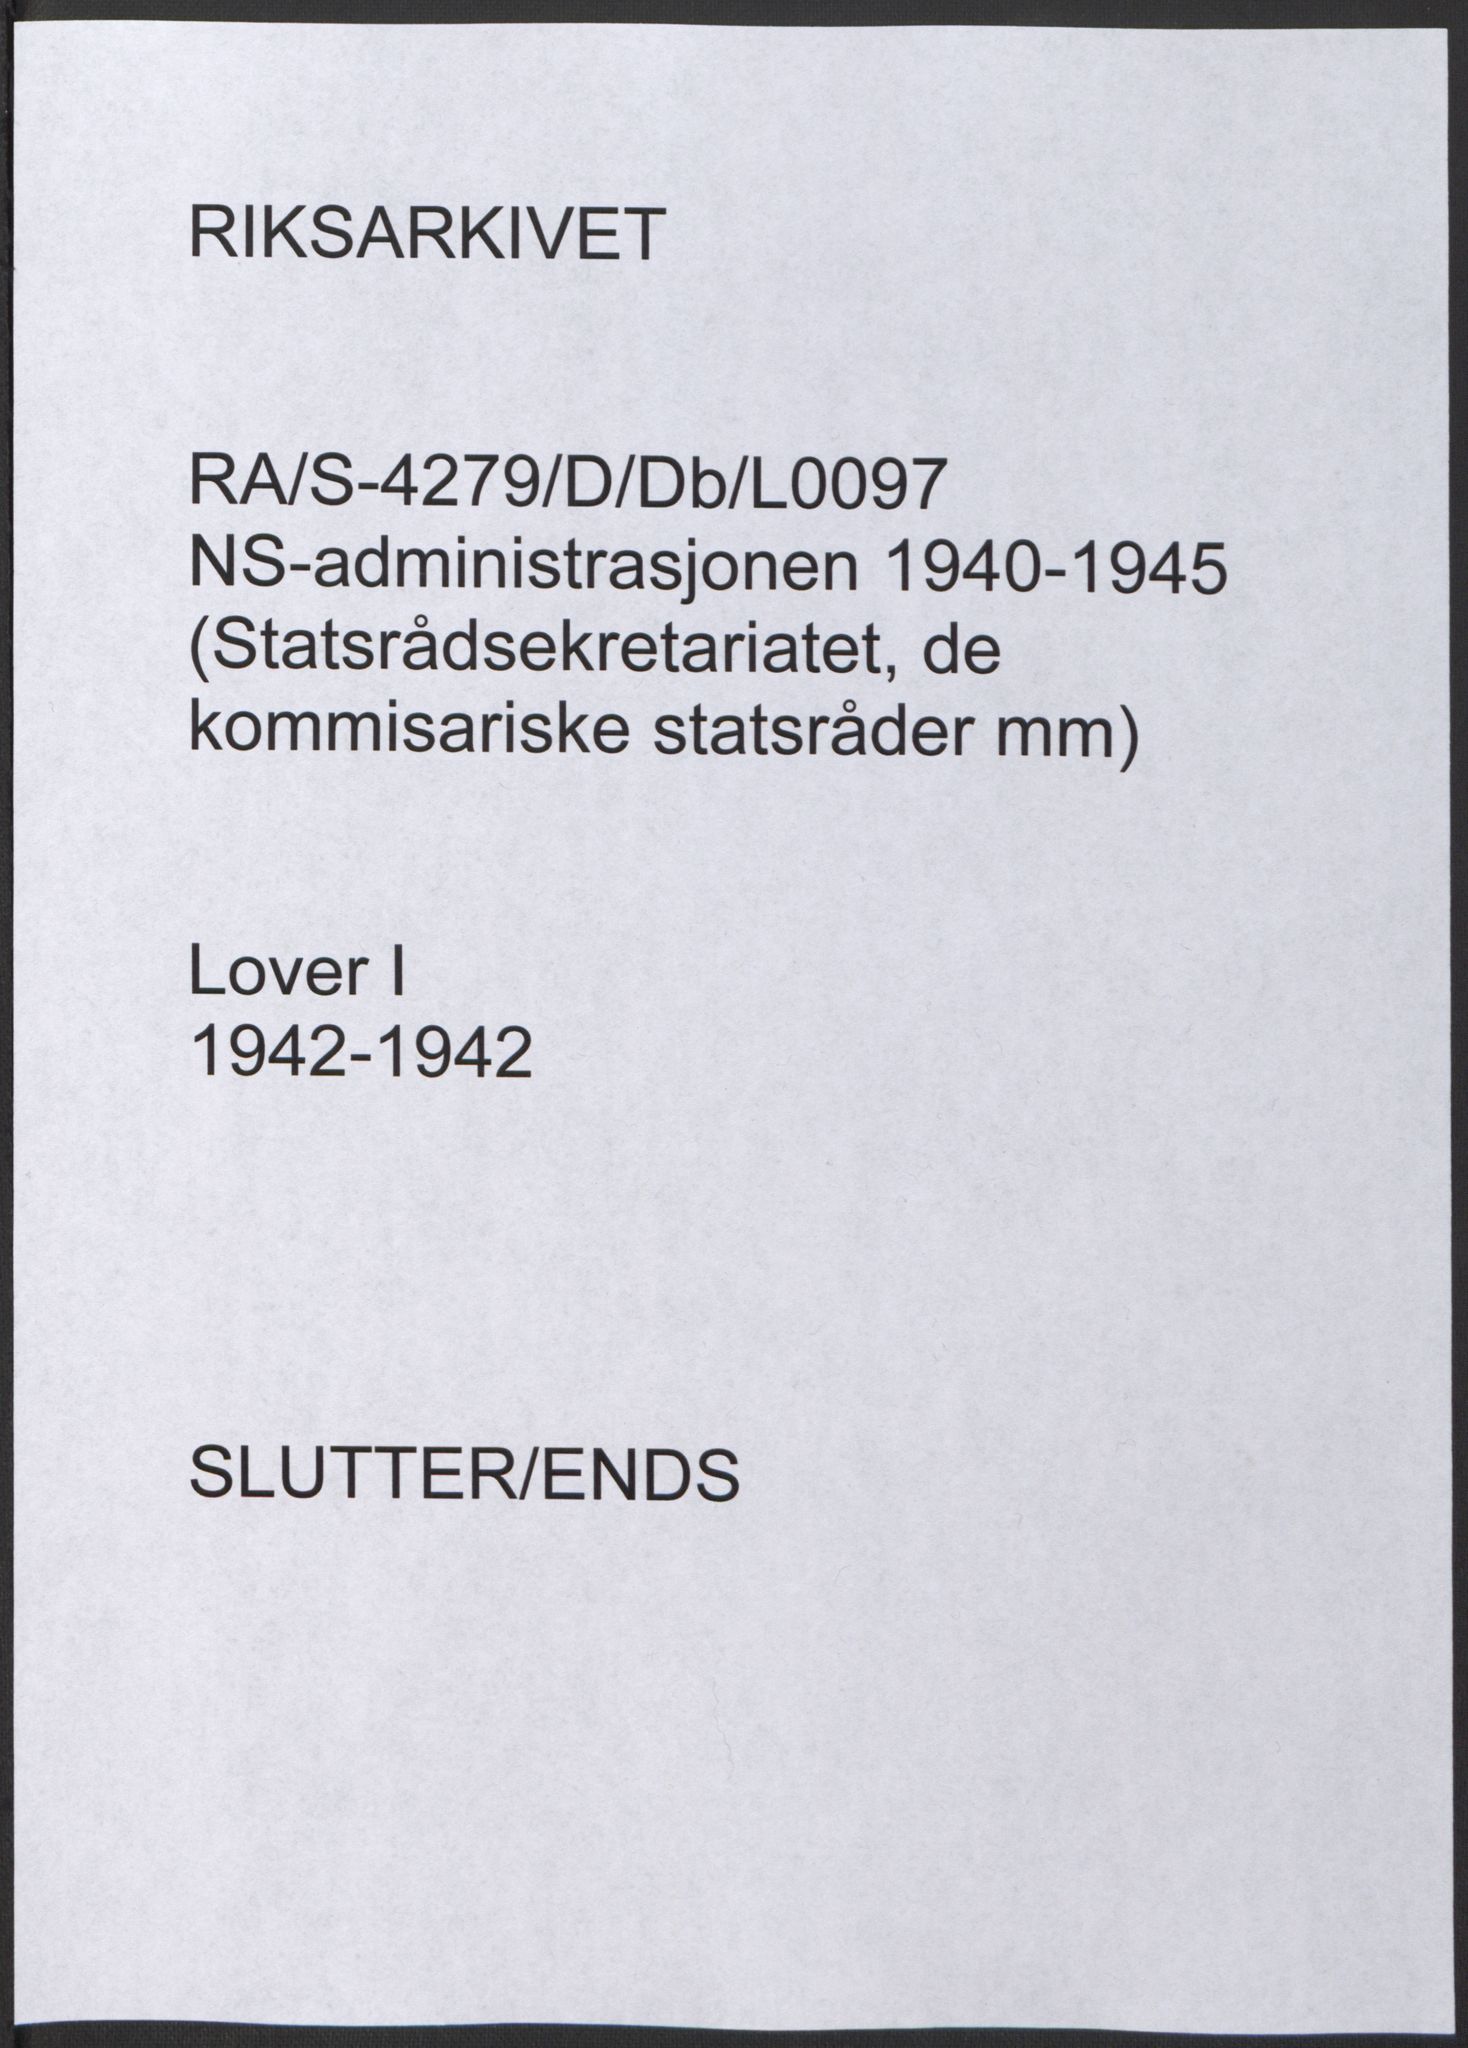 NS-administrasjonen 1940-1945 (Statsrådsekretariatet, de kommisariske statsråder mm), RA/S-4279/D/Db/L0097: Lover I, 1942, s. 358